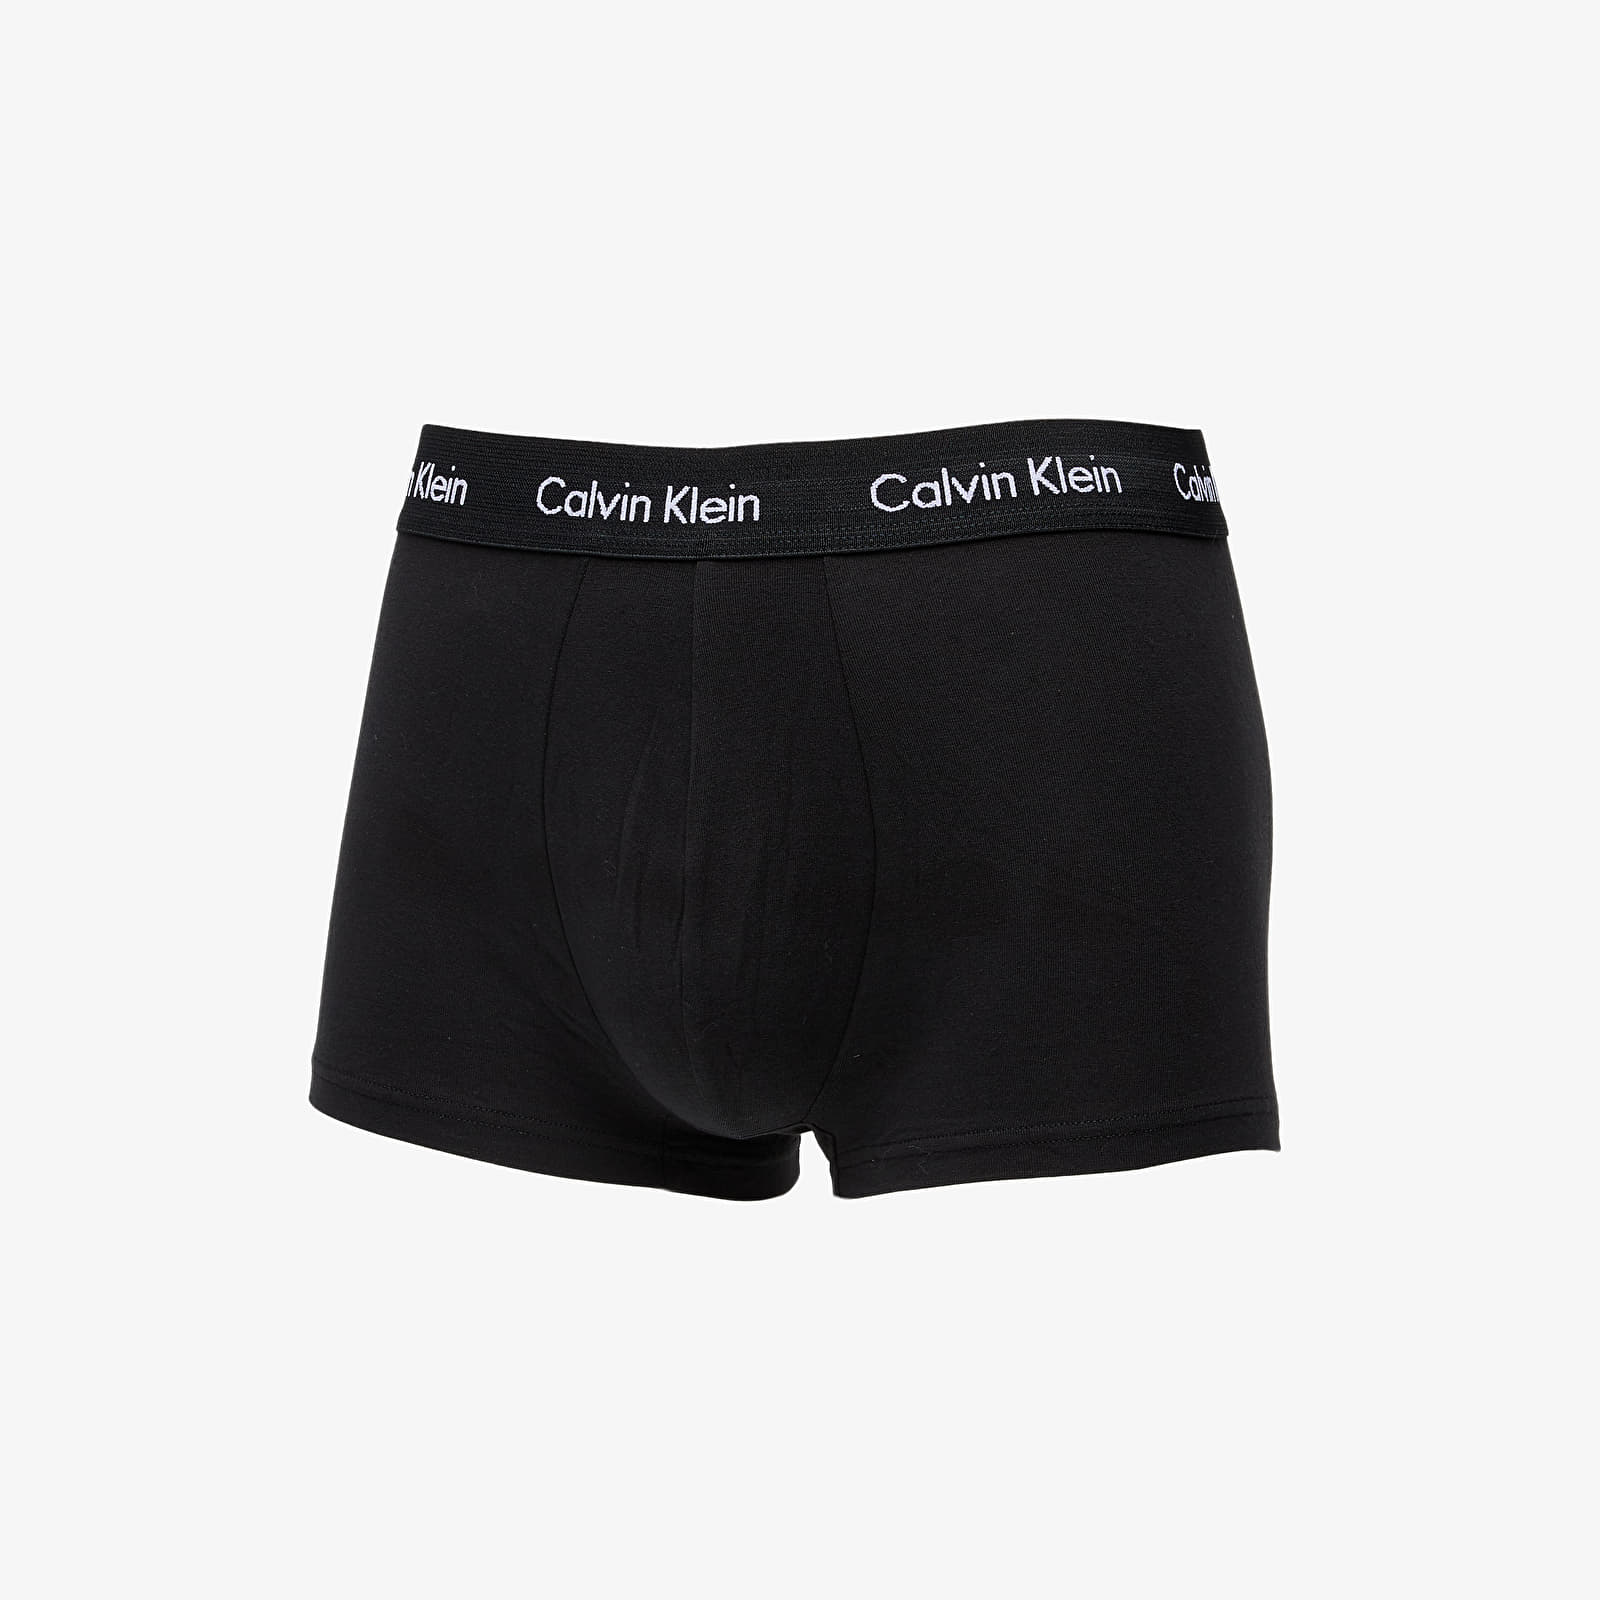 Bokserki Calvin Klein Cotton Stretch Trunks 3 Pack Black/ White